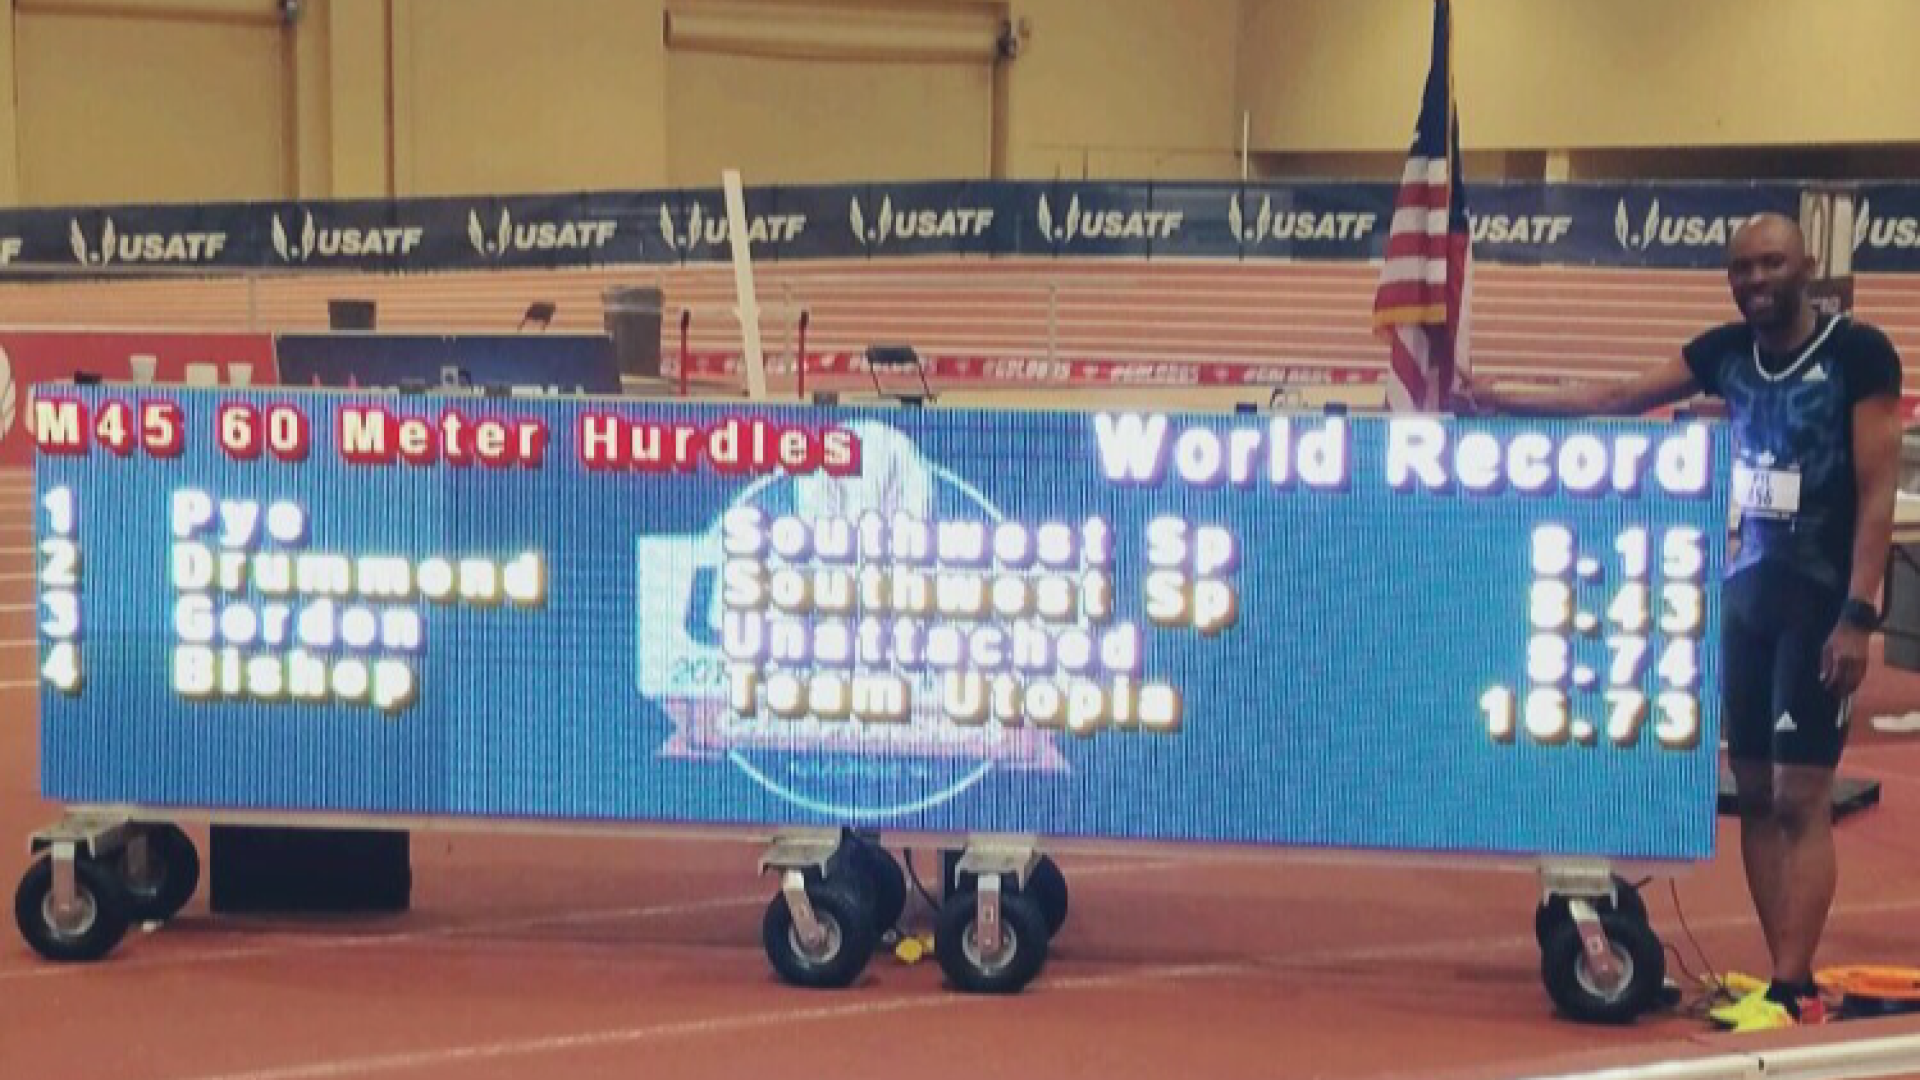 Pye takes the world record